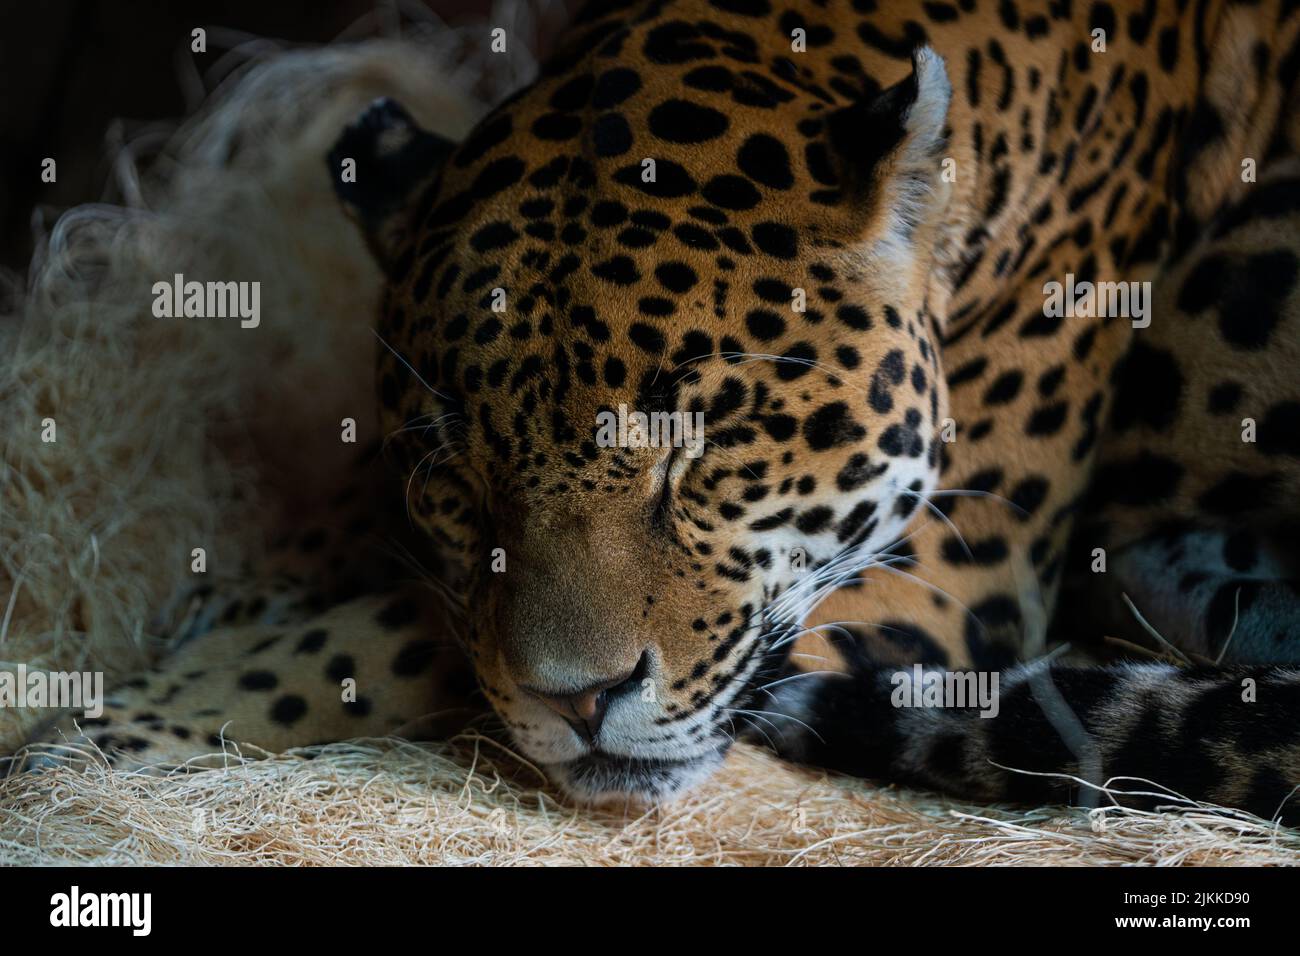 A portrait of a sleeping amur leopard Stock Photo